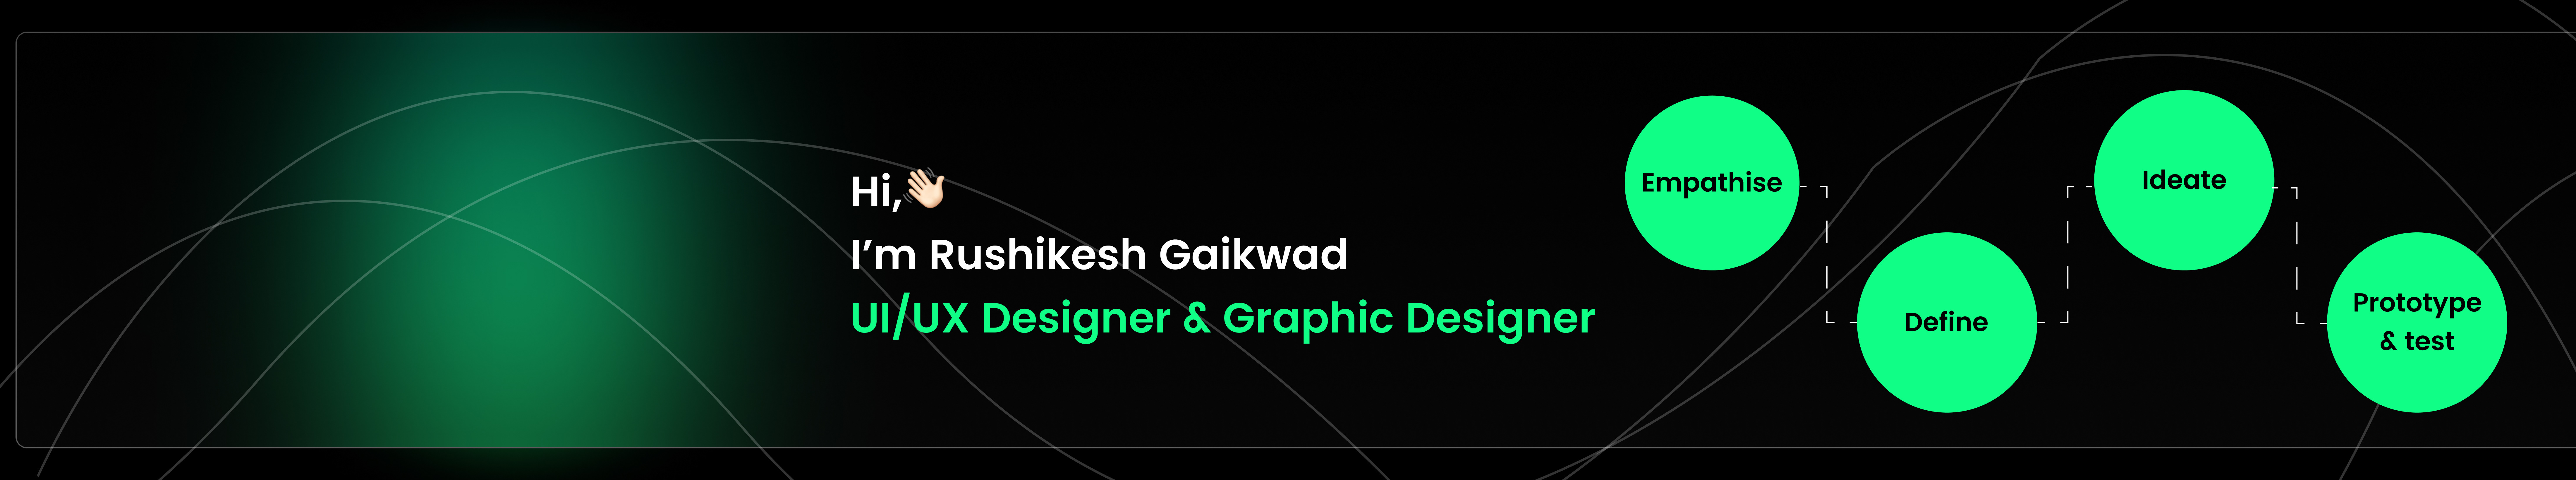 Banner de perfil de Rushikesh Gaikwad